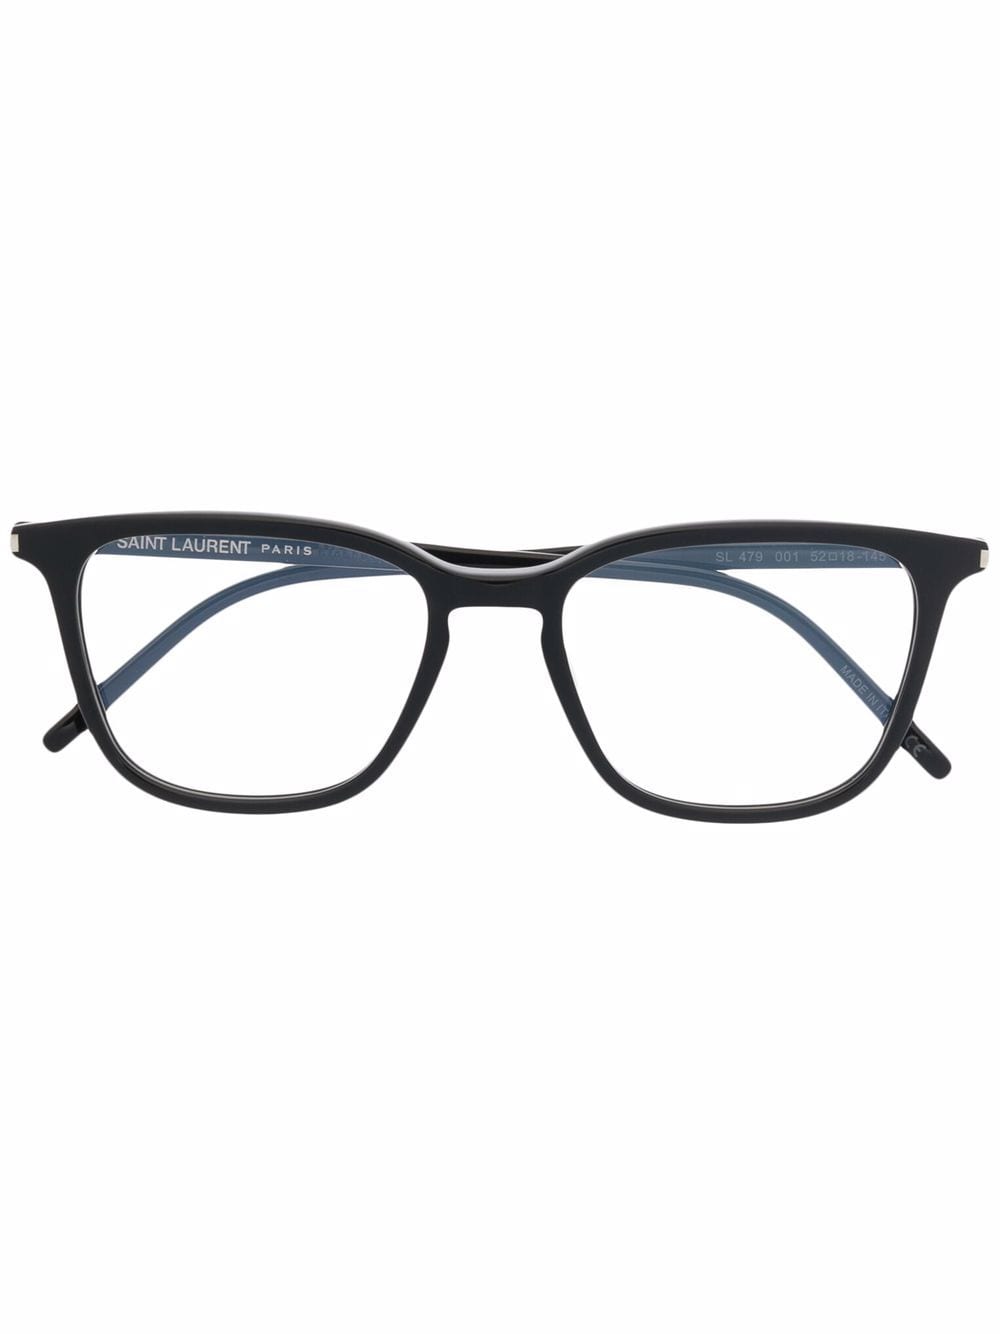 Saint Laurent Eyewear square frame glasses - Black von Saint Laurent Eyewear